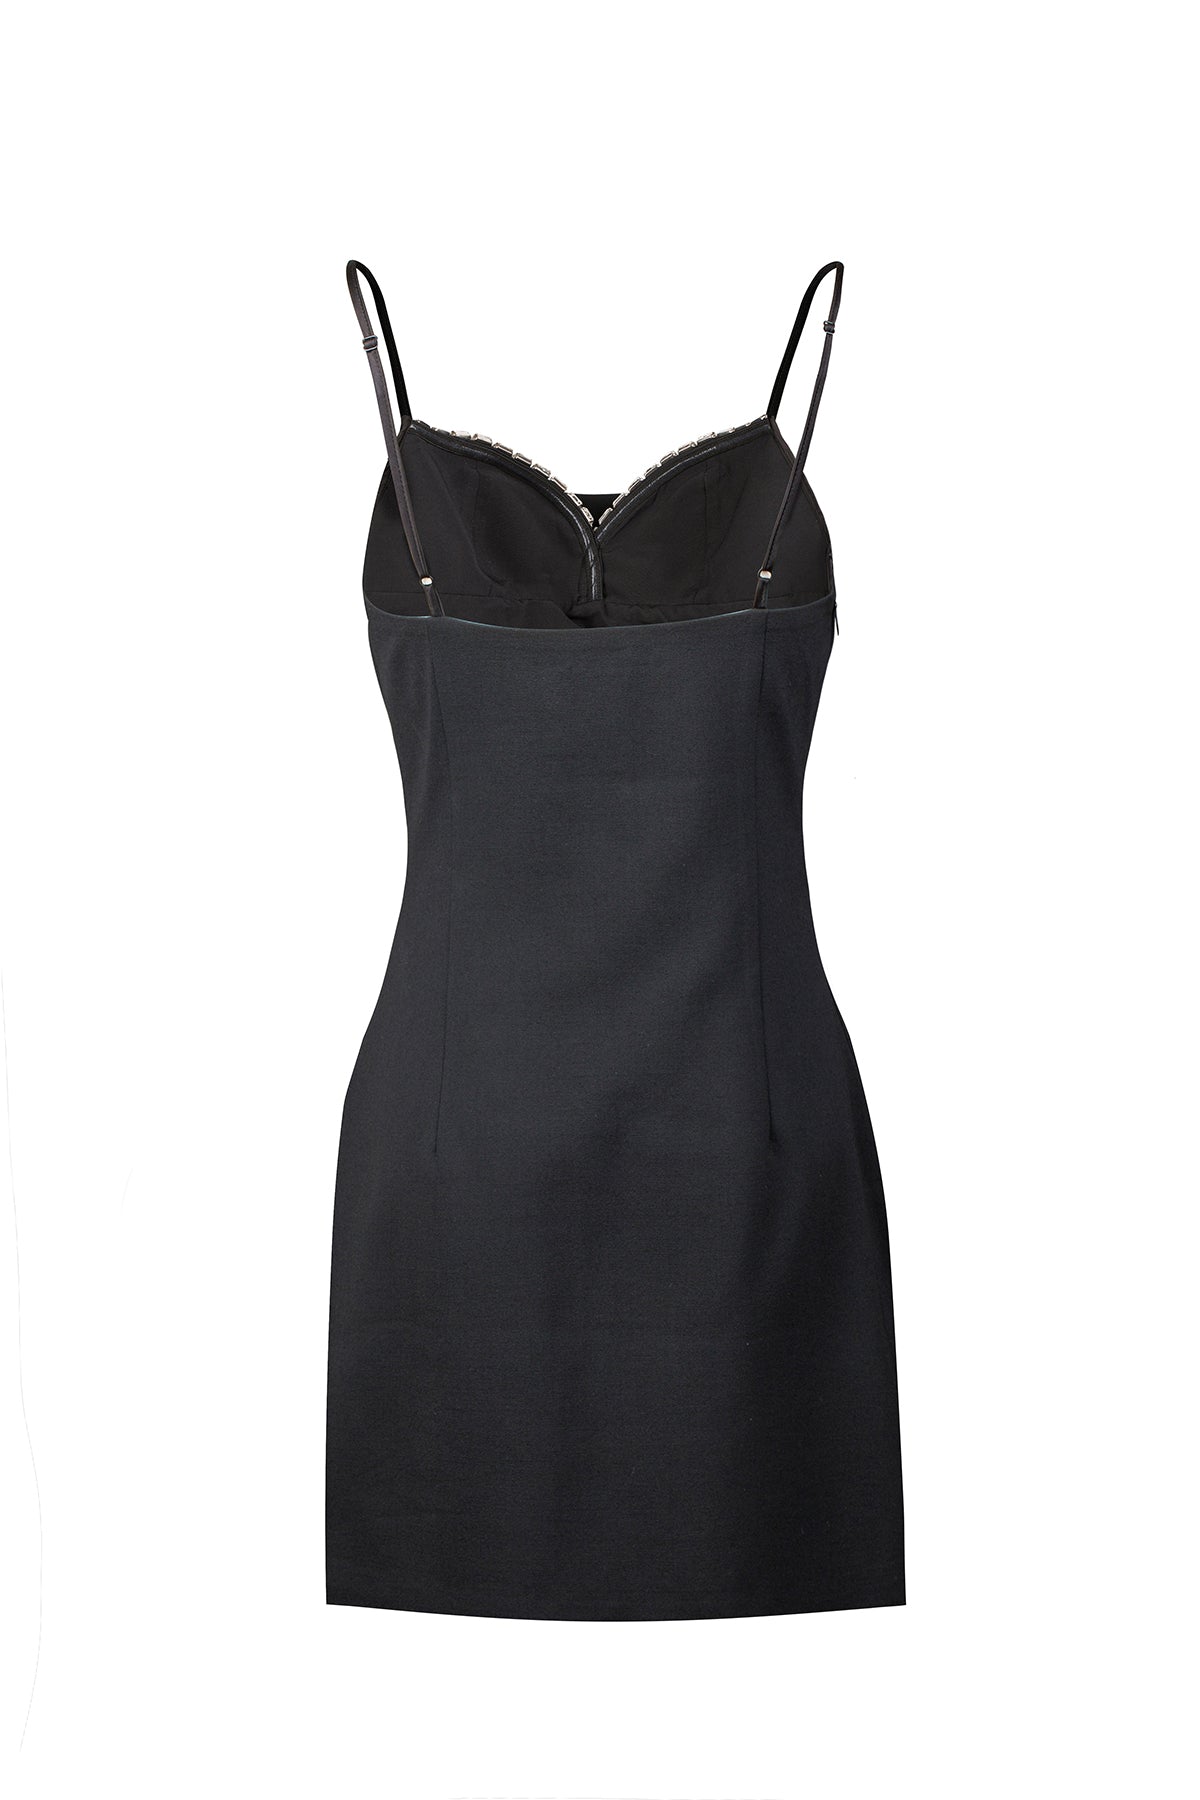 Elsie Black Dress | Nana Jacqueline Designer Wear